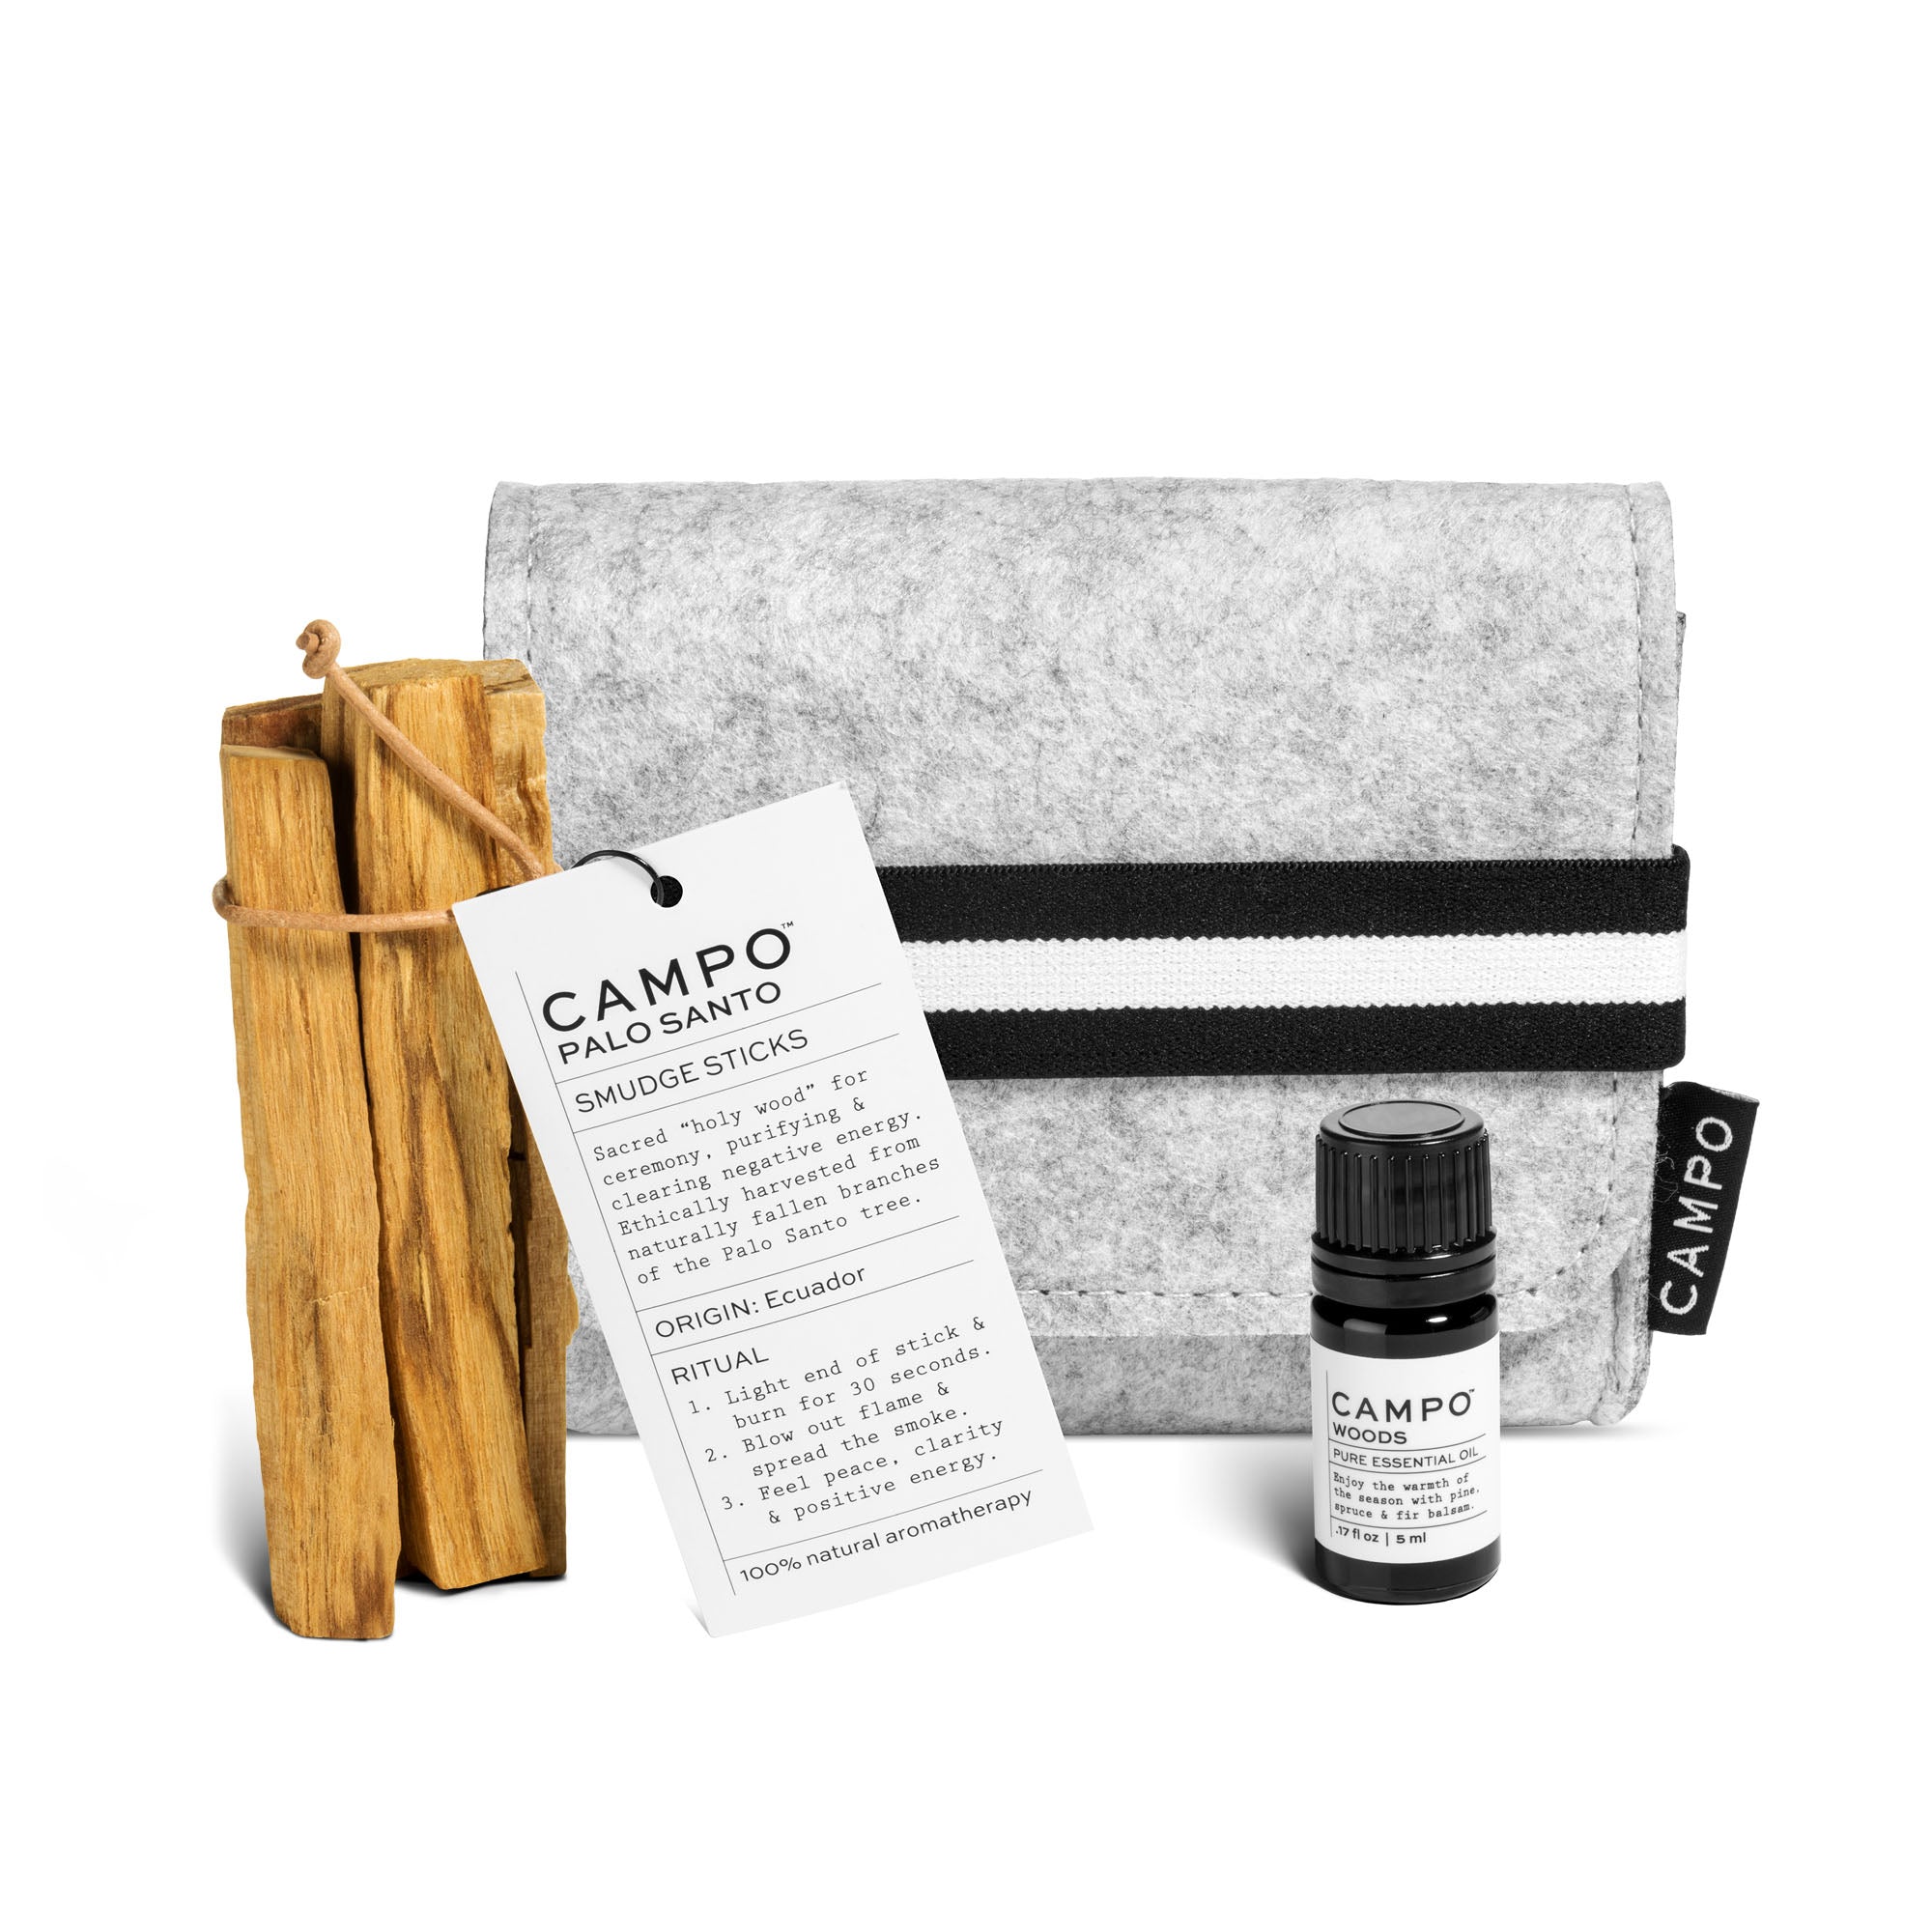 Palo Santo Smudge Sticks + Essential Oil Kit - WOODS Blend